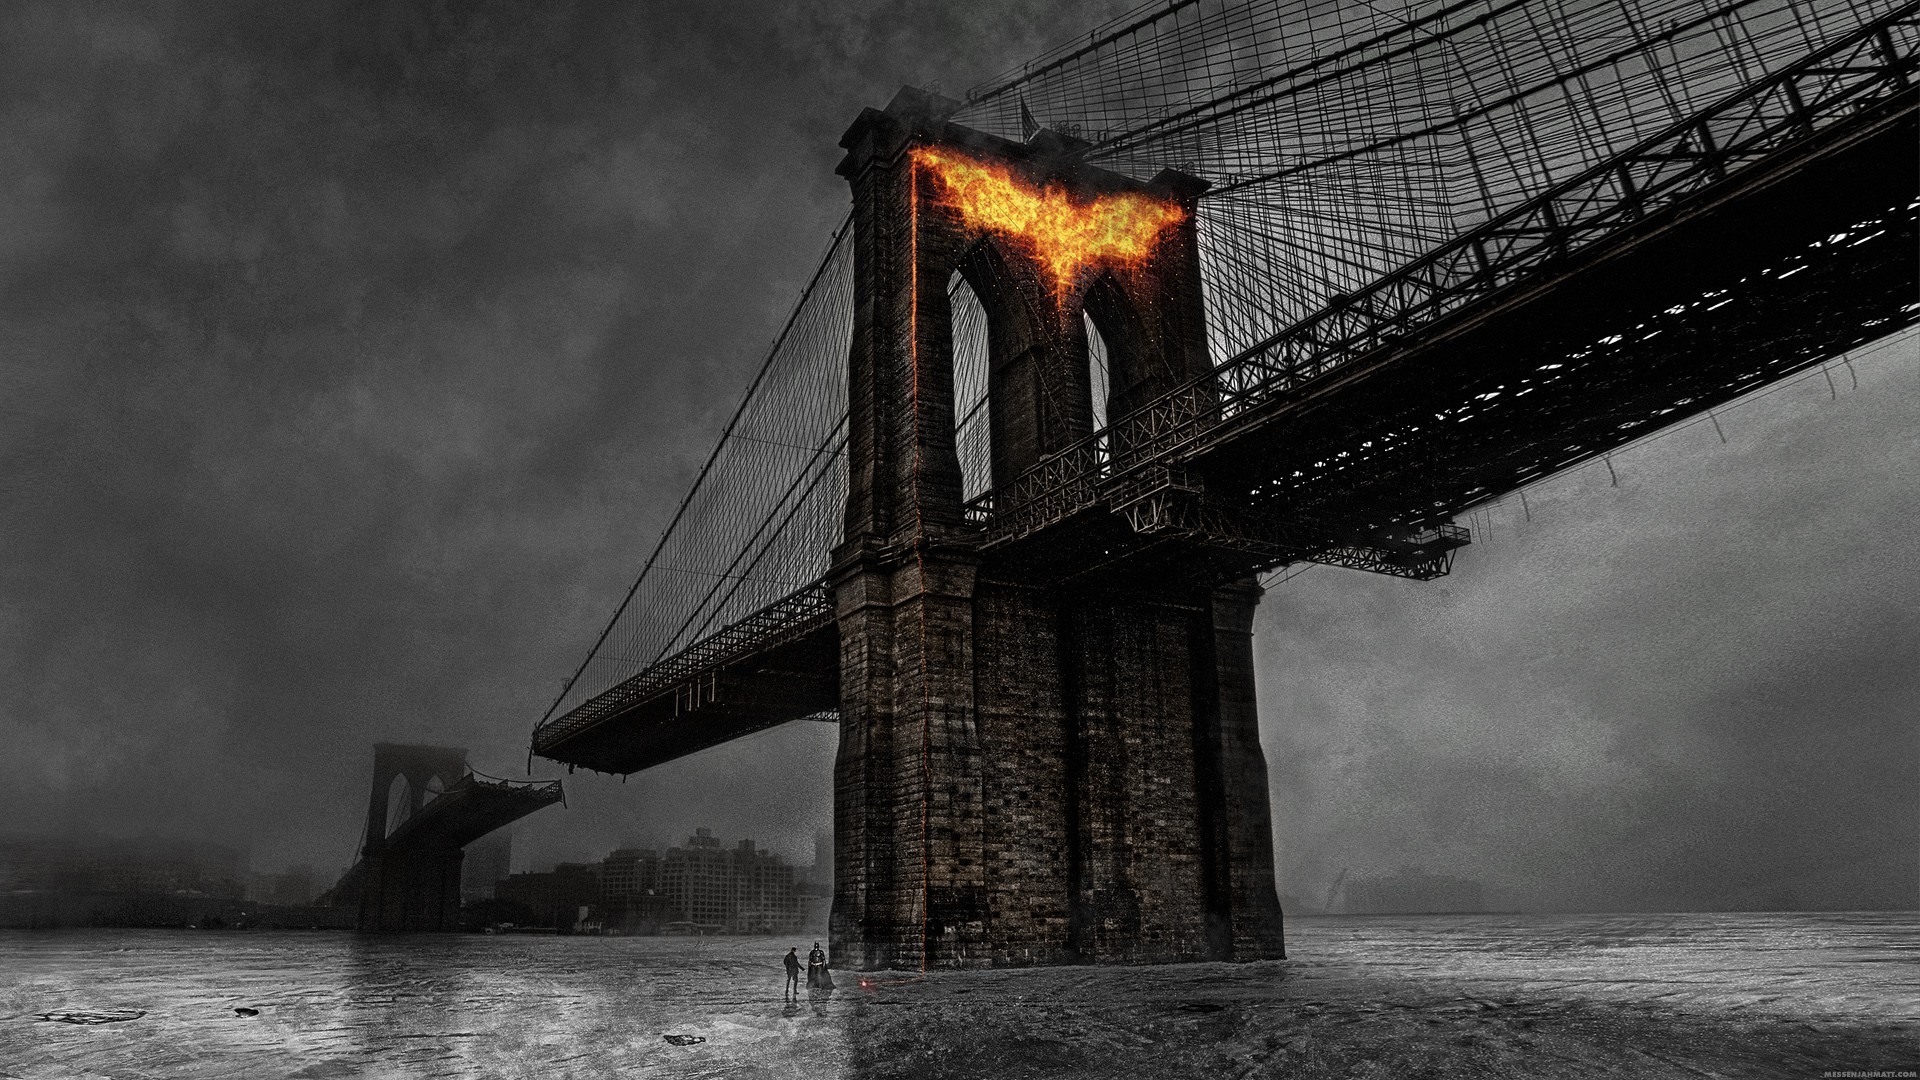 General 1920x1080 movies The Dark Knight Rises Batman MessenjahMatt bridge Batman logo